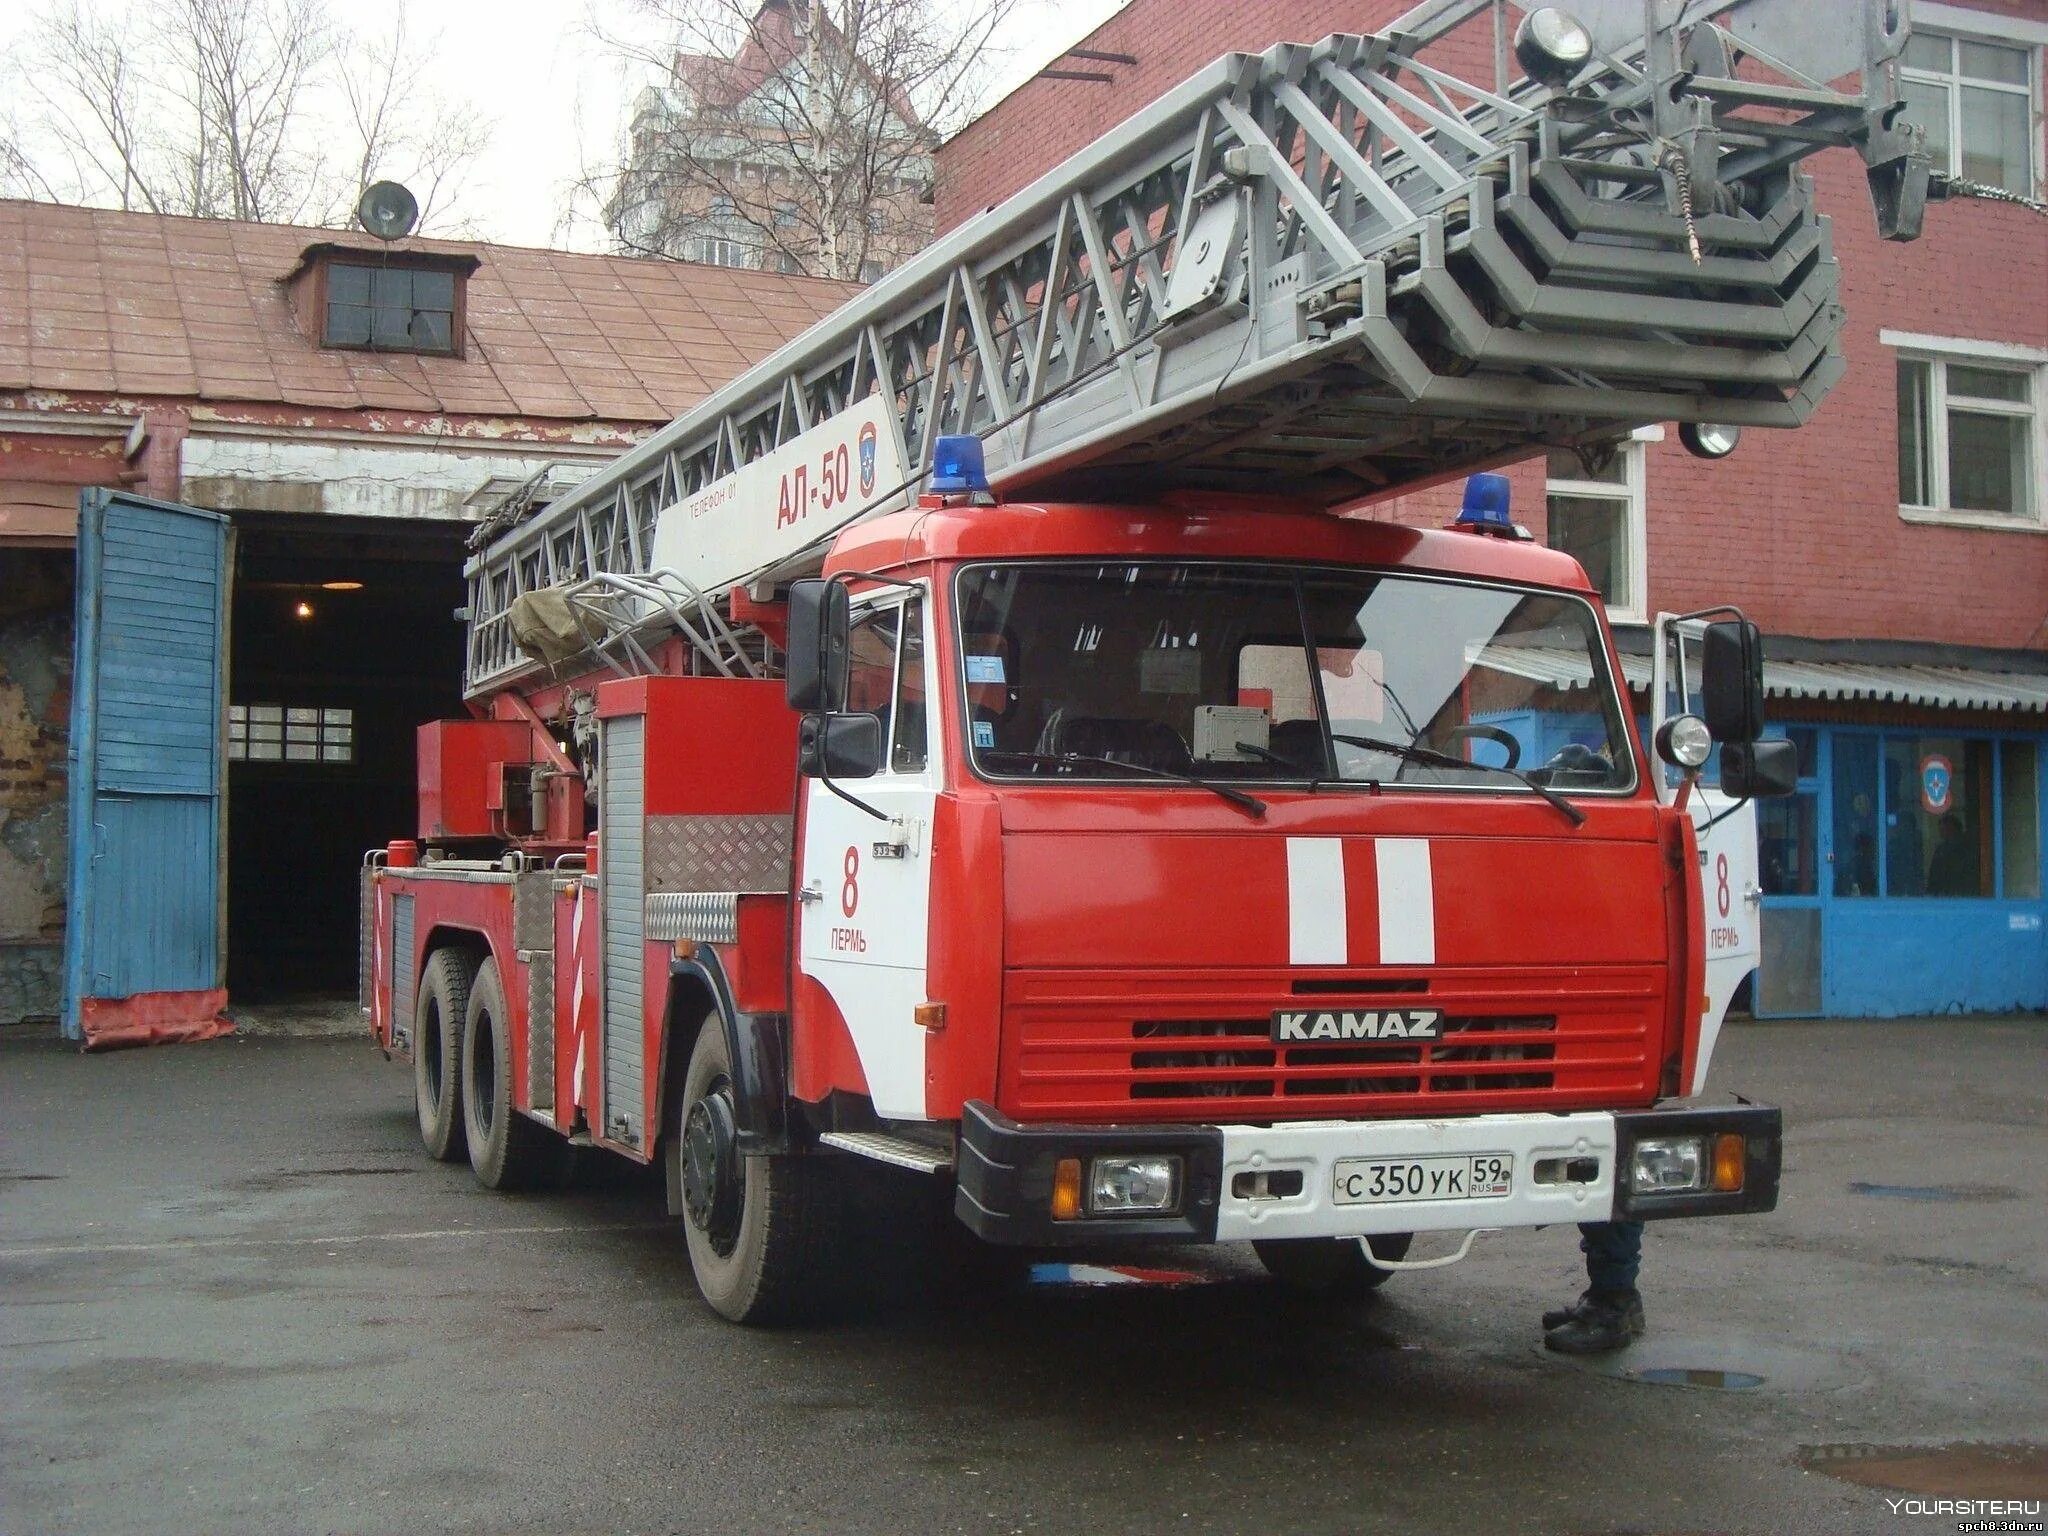 Пожарная автолестница ал 50 КАМАЗ. Ал-50 (КАМАЗ 65115) пожарная техника. Ал-50 КАМАЗ-65115. Автолестница пожарная ал-50 КАМАЗ-65115.